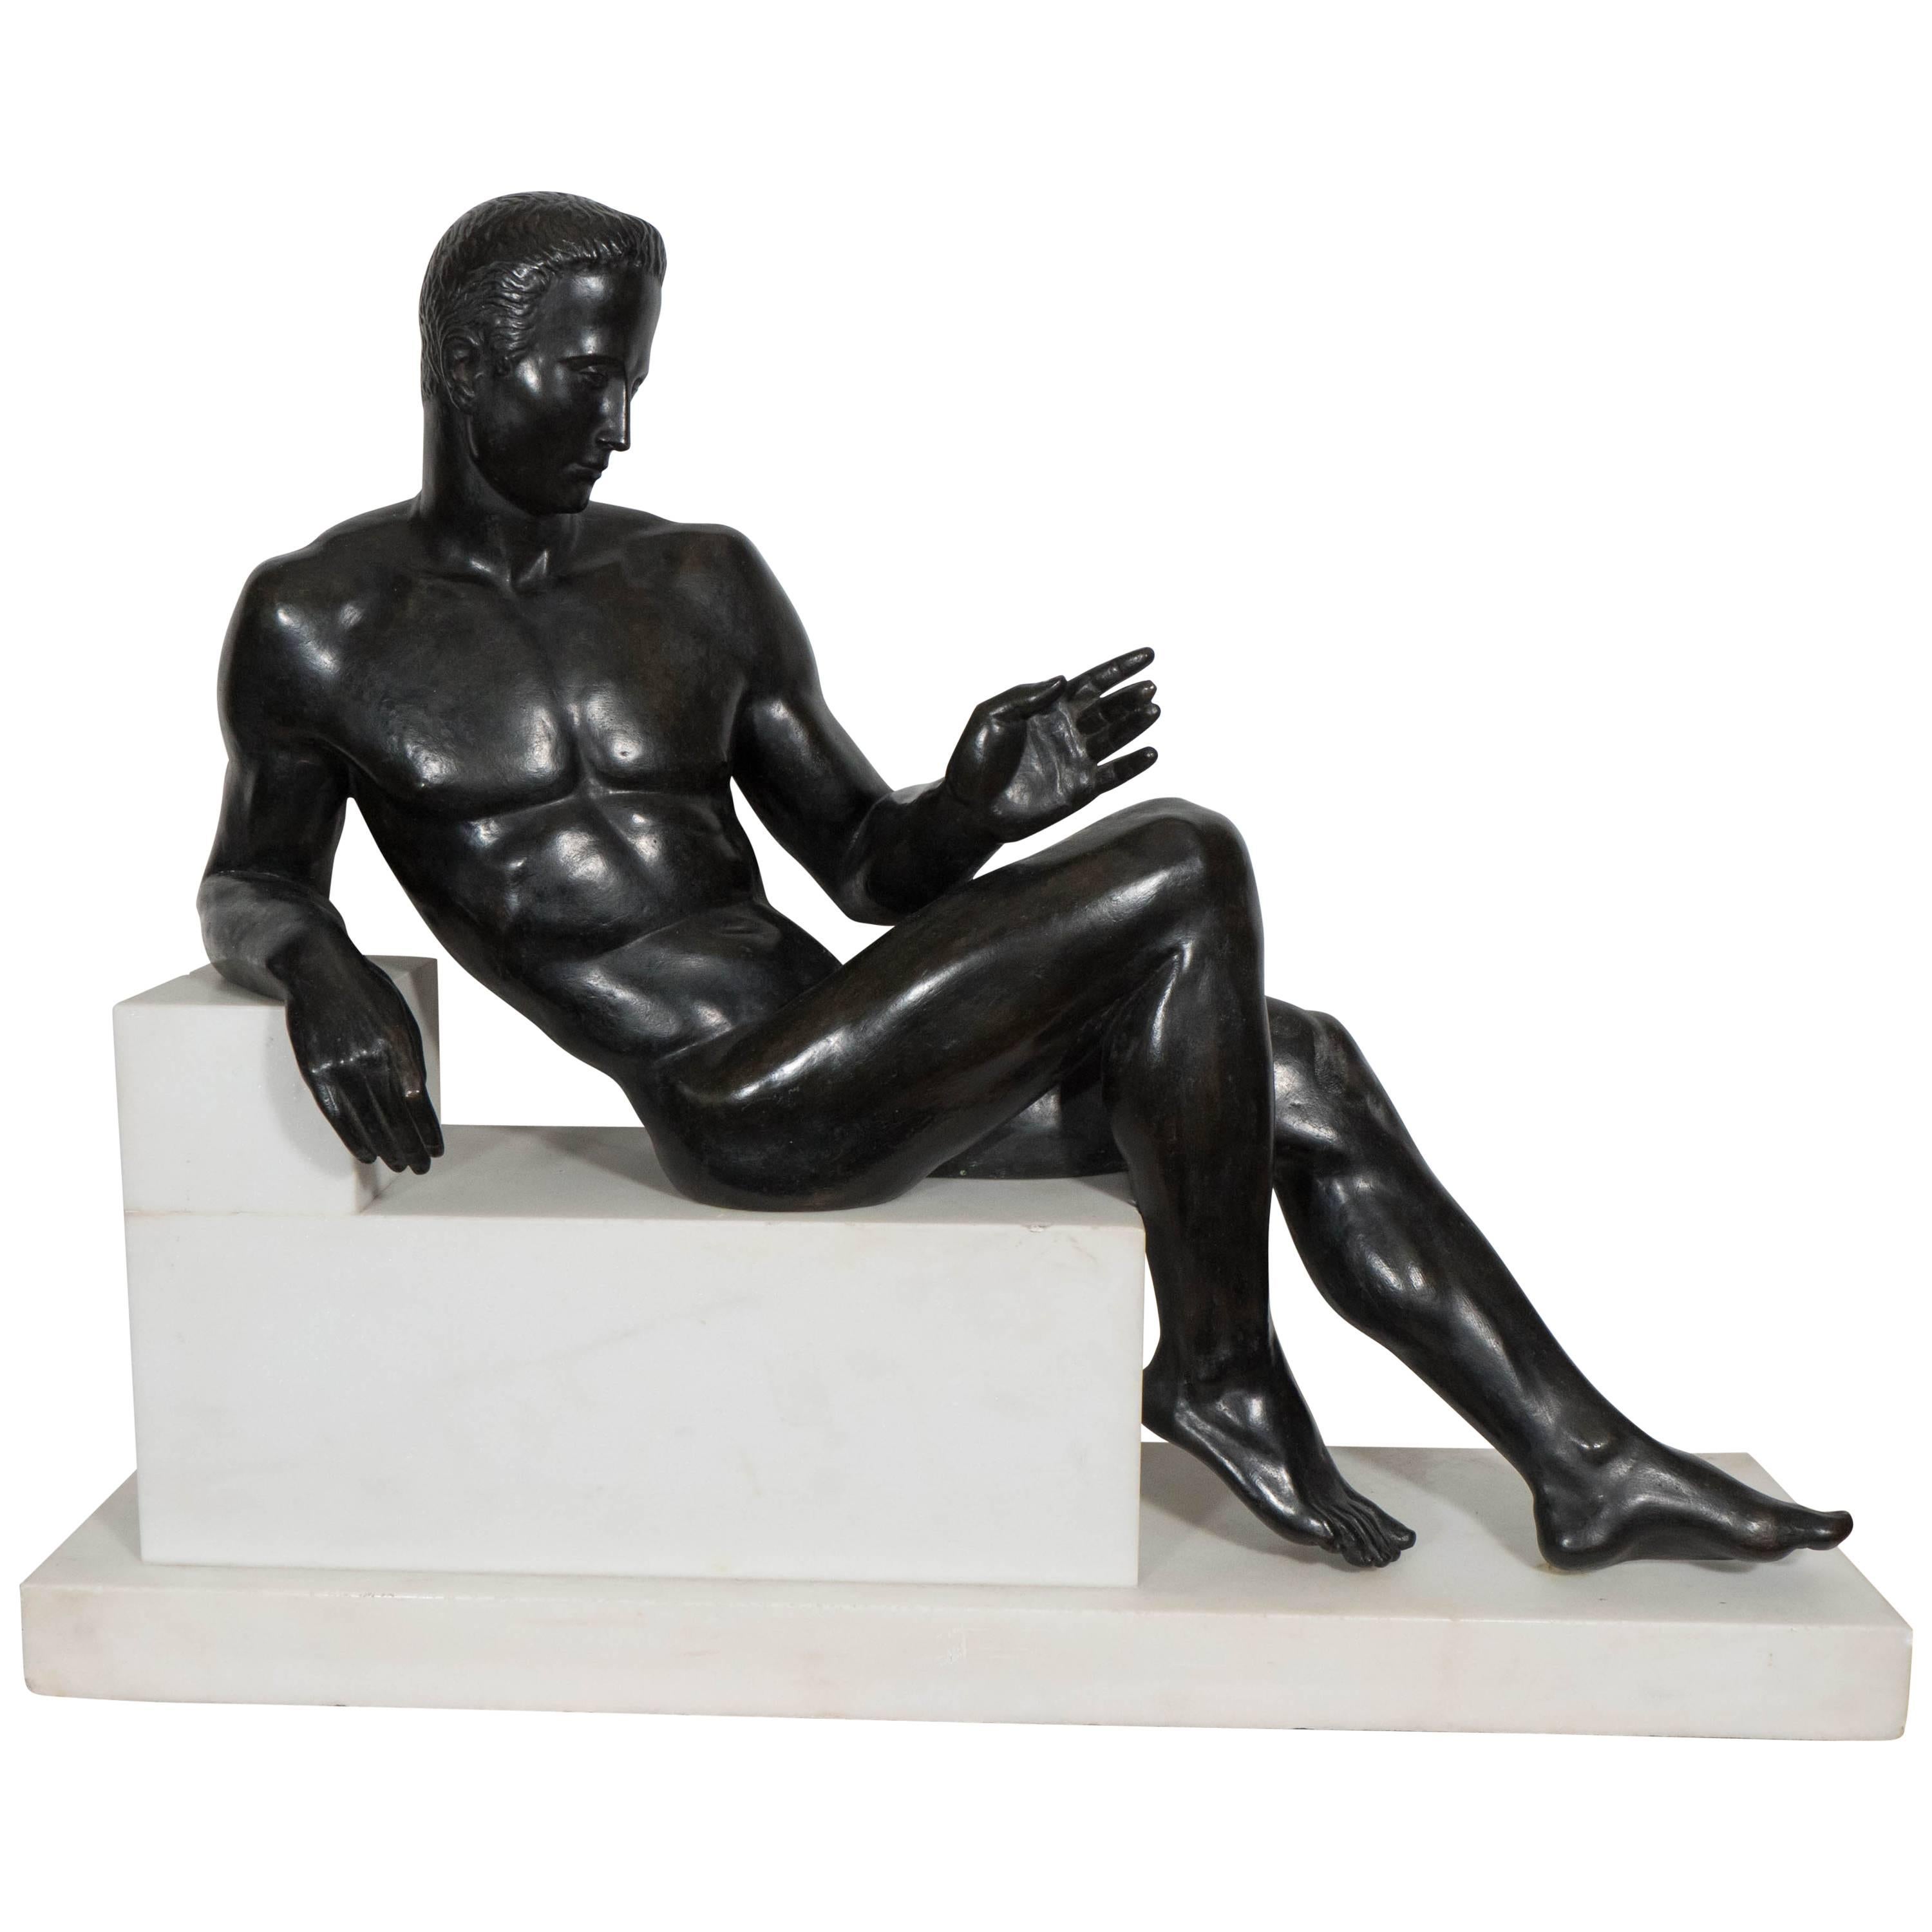 Escultura desnudo masculino estilo neoclásico italiano en bronce patinado